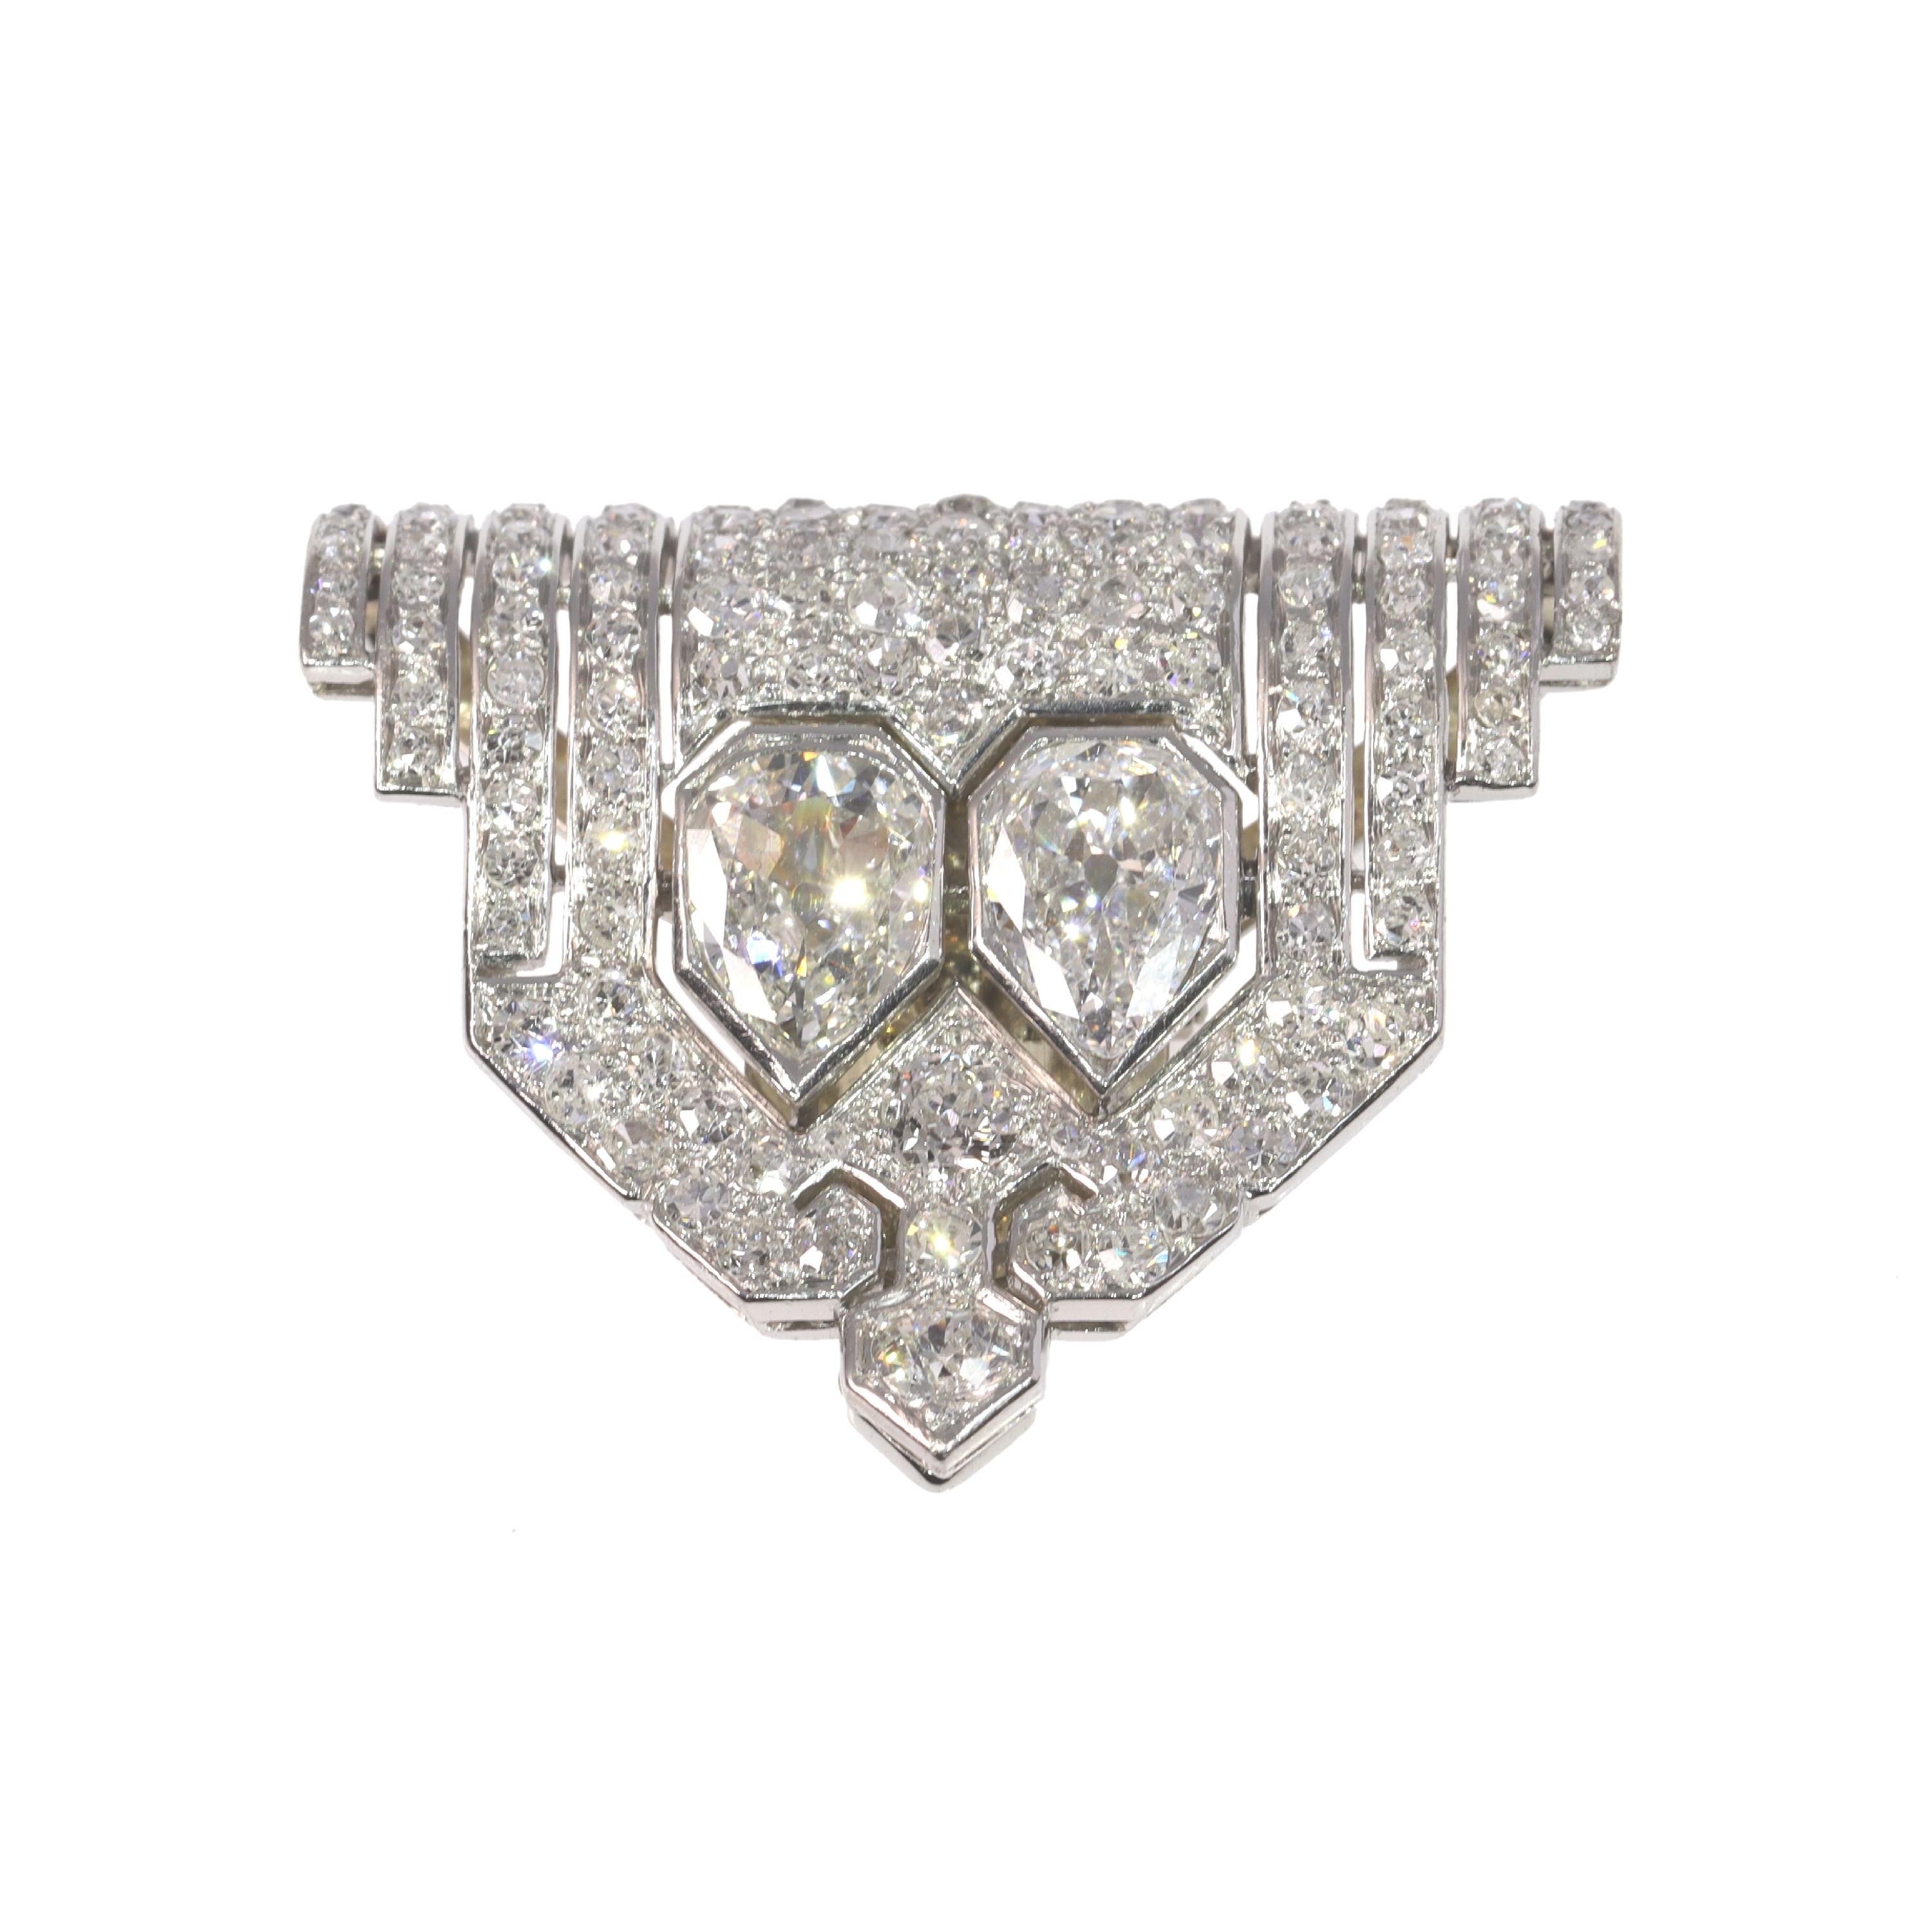 Vintage French platinum diamond Art Deco clip